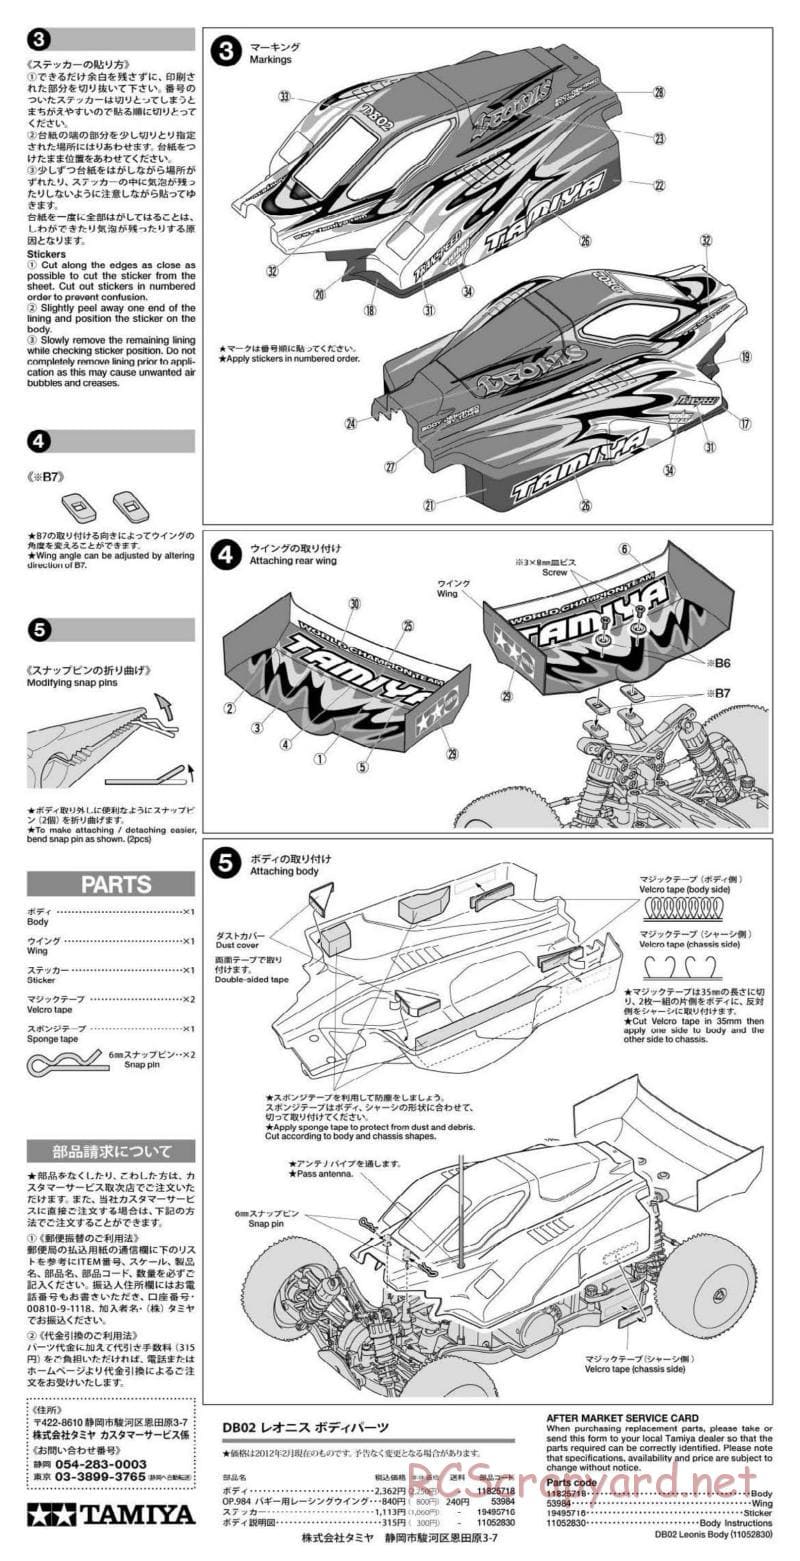 Tamiya - Leonis - DB-02 Chassis - Manual - Page 30